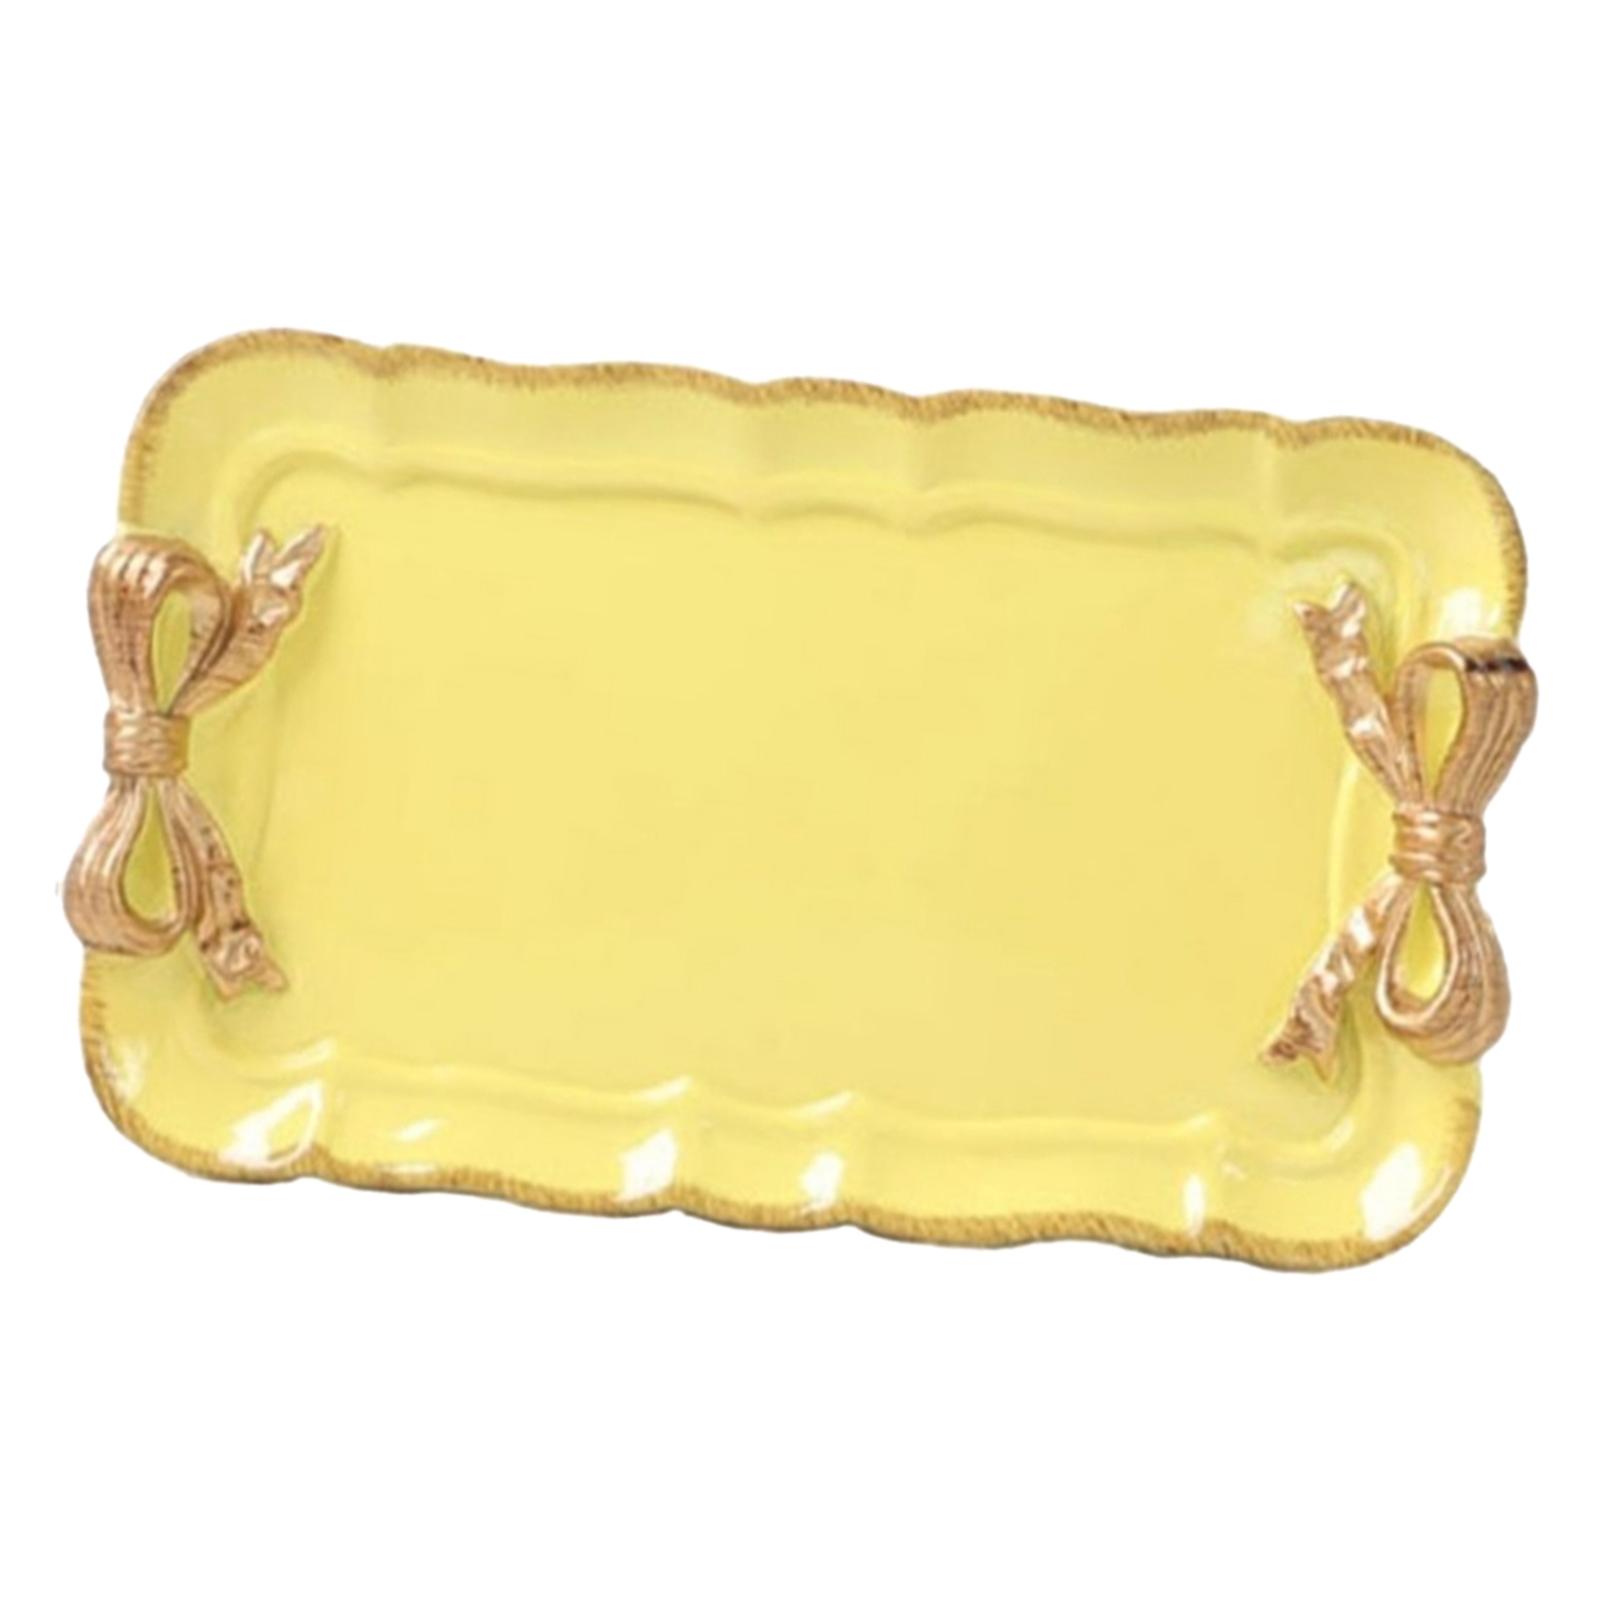 Jewelry Display Tray Fashion Storage Box for Earrings Pendants Dresser yellow